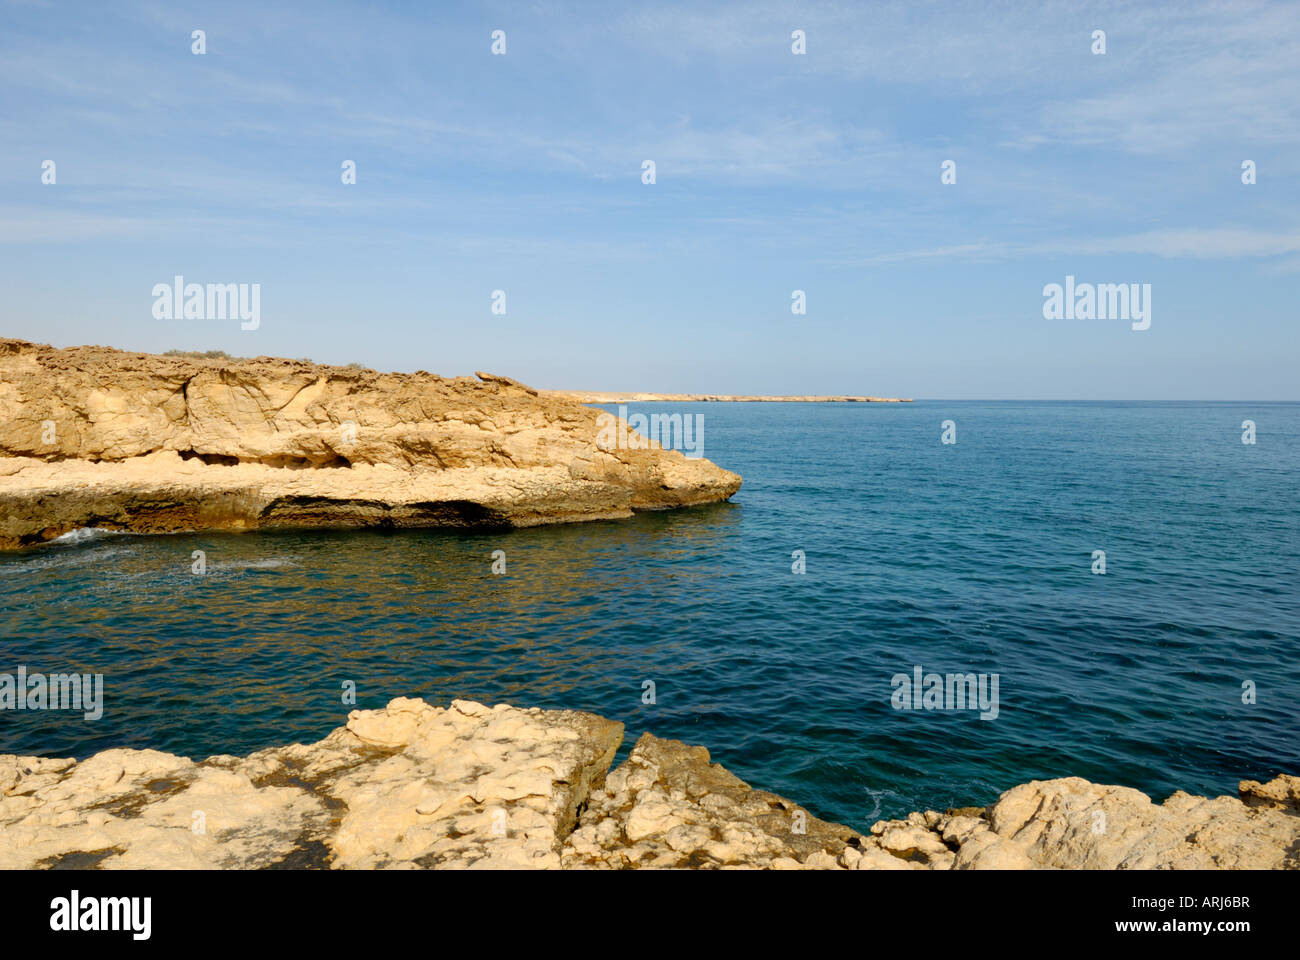 Oman - côte rocheuse de la mer d'Oman Banque D'Images